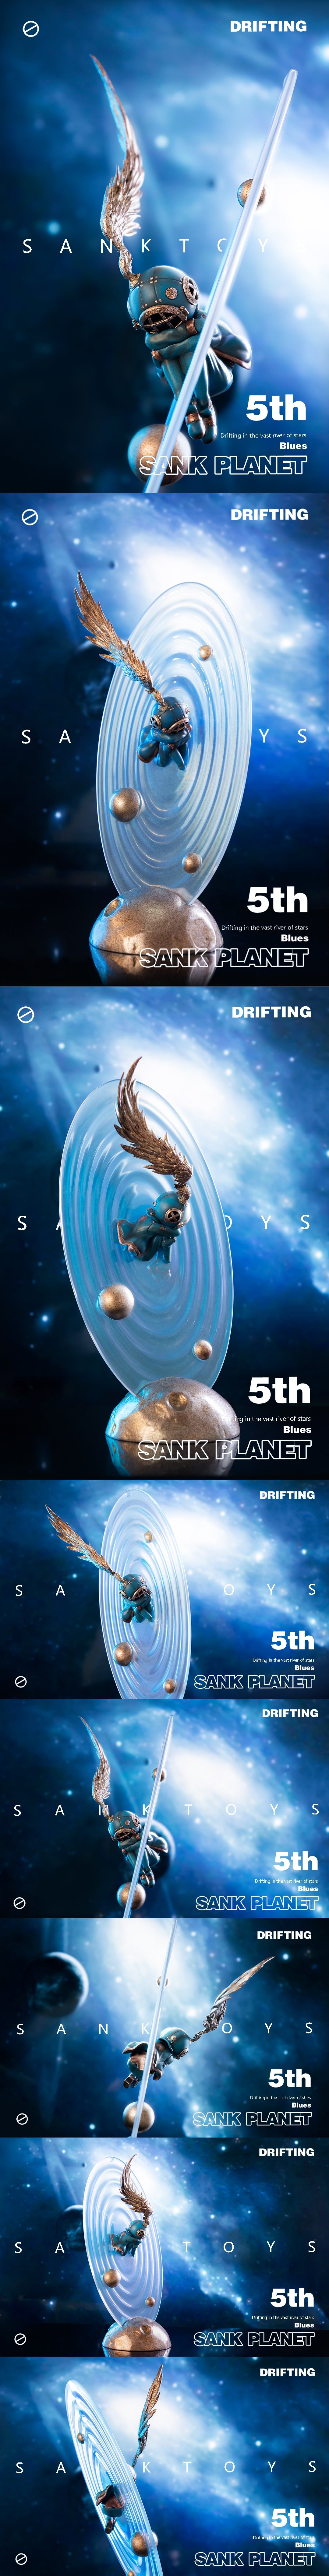 SANK TOYS Sank Planet Blues Collectible Figurine